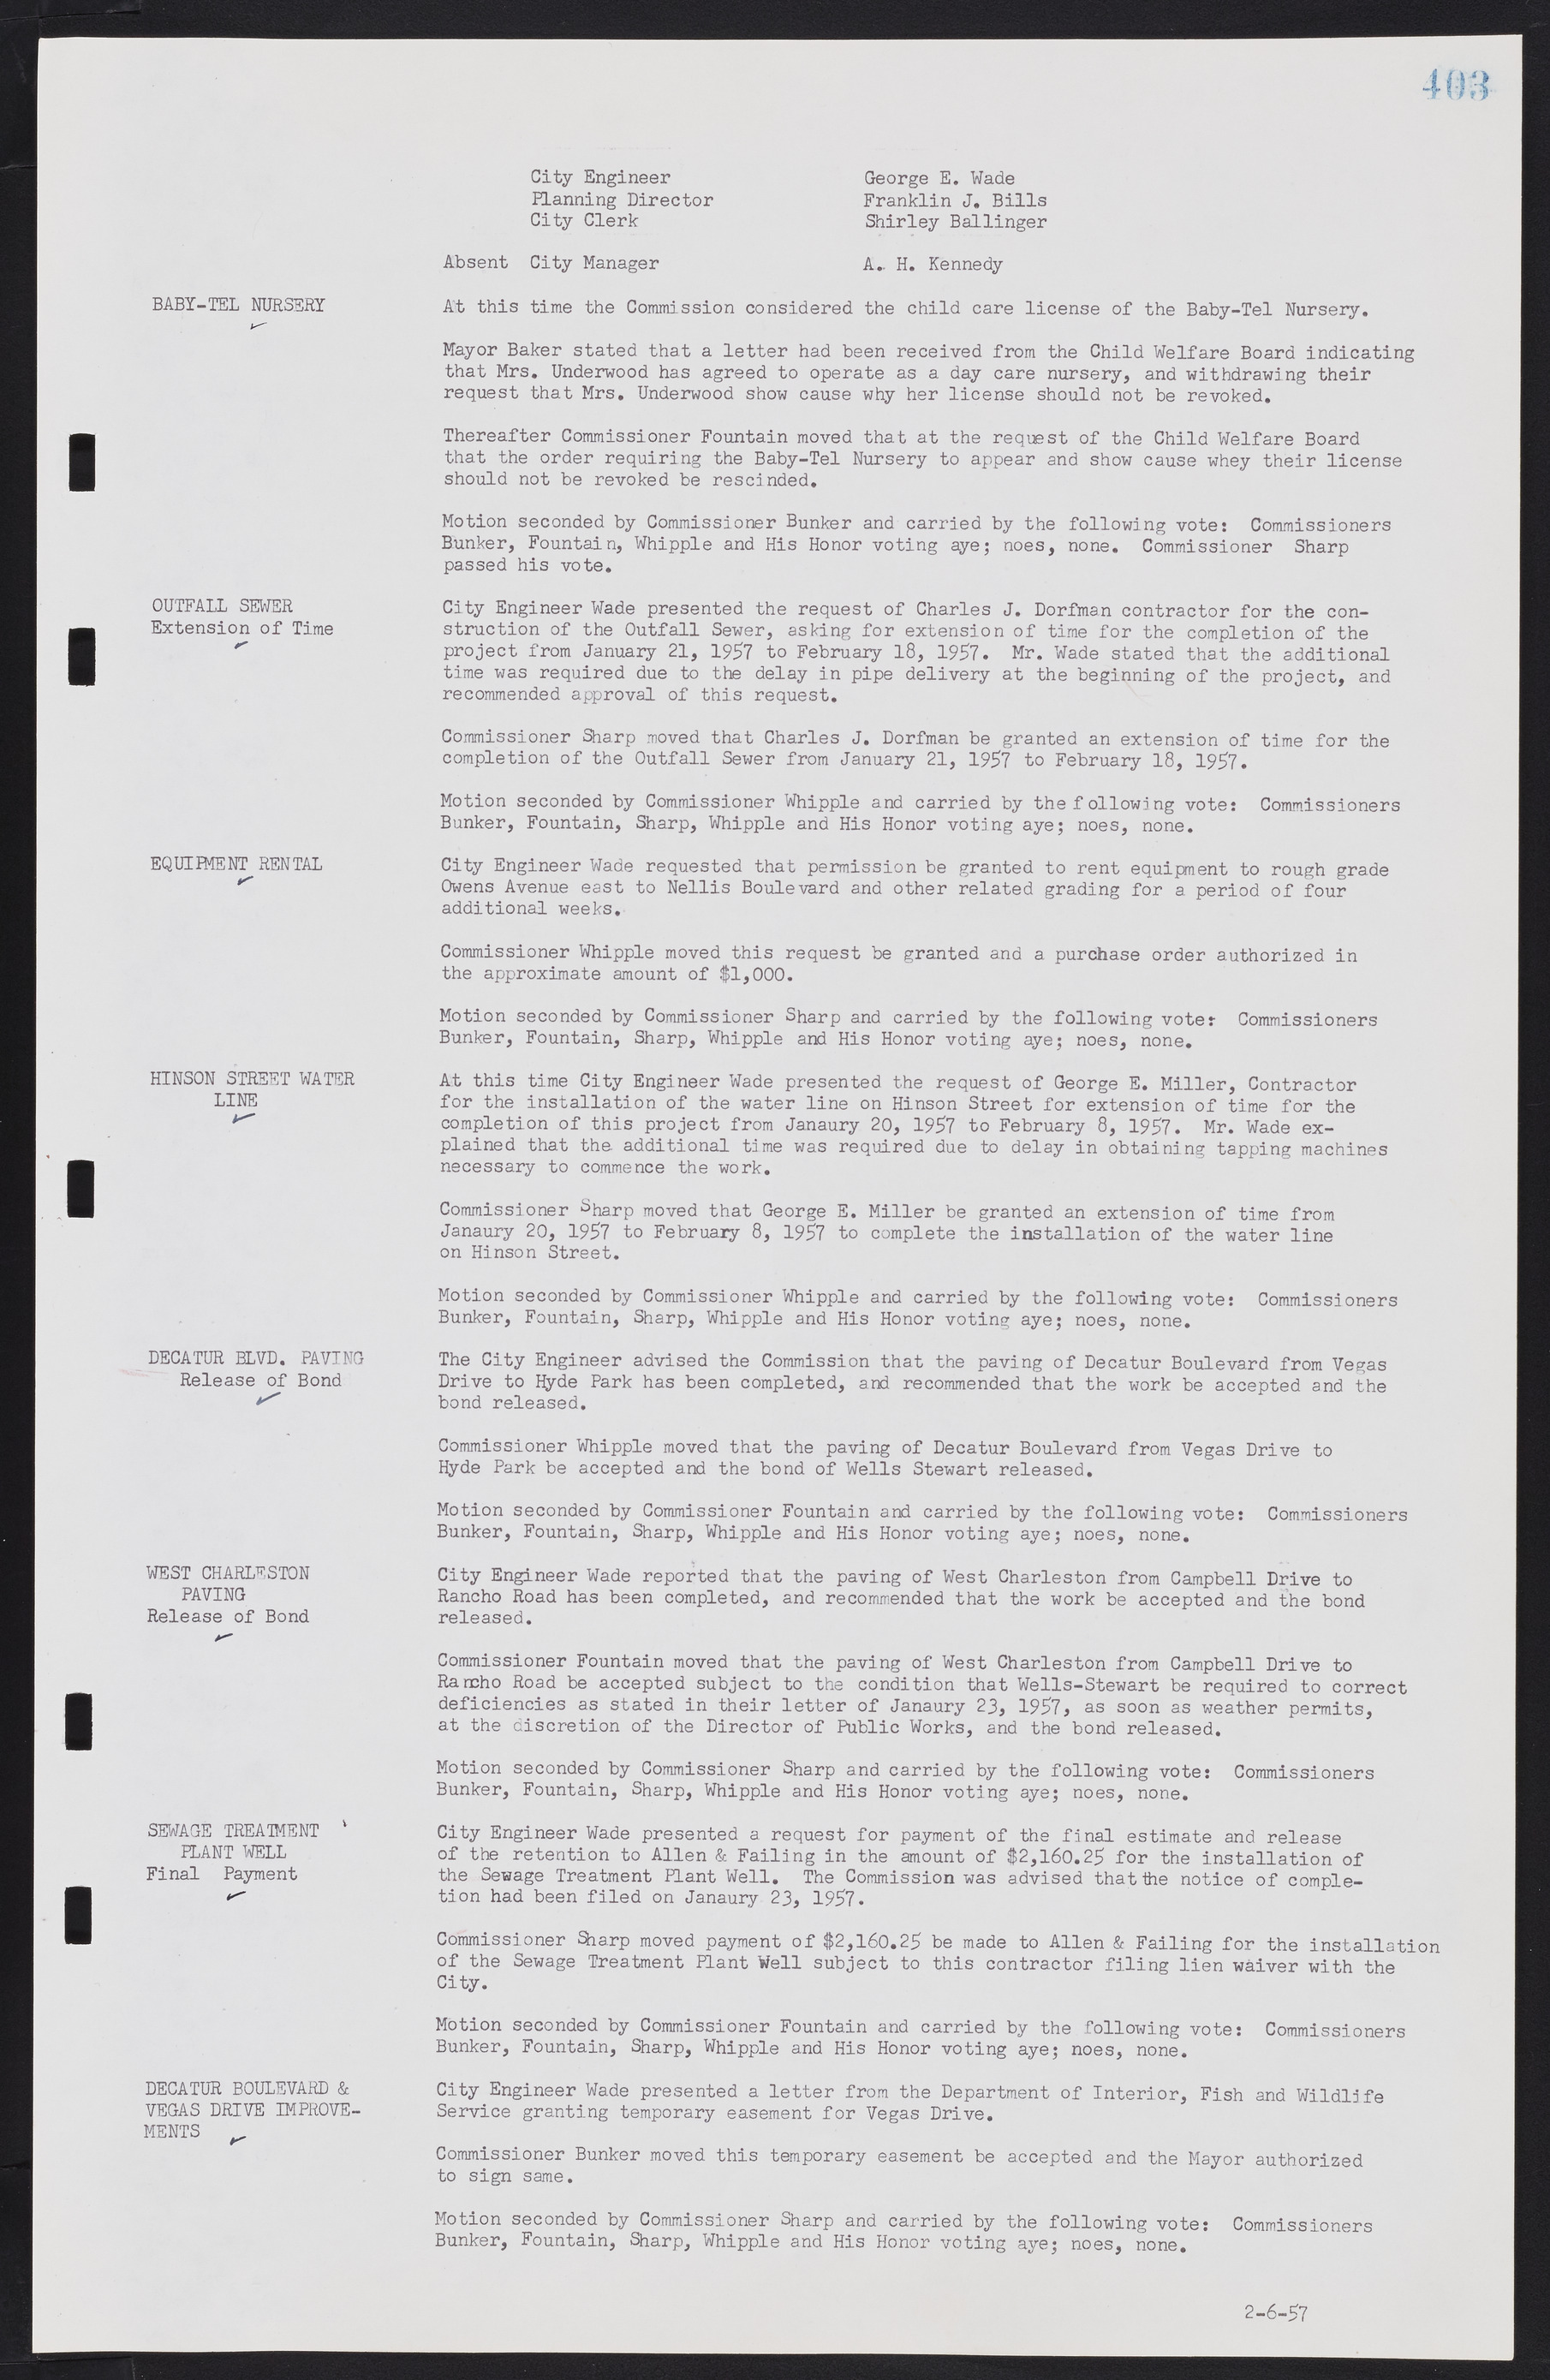 Las Vegas City Commission Minutes, September 21, 1955 to November 20, 1957, lvc000010-423